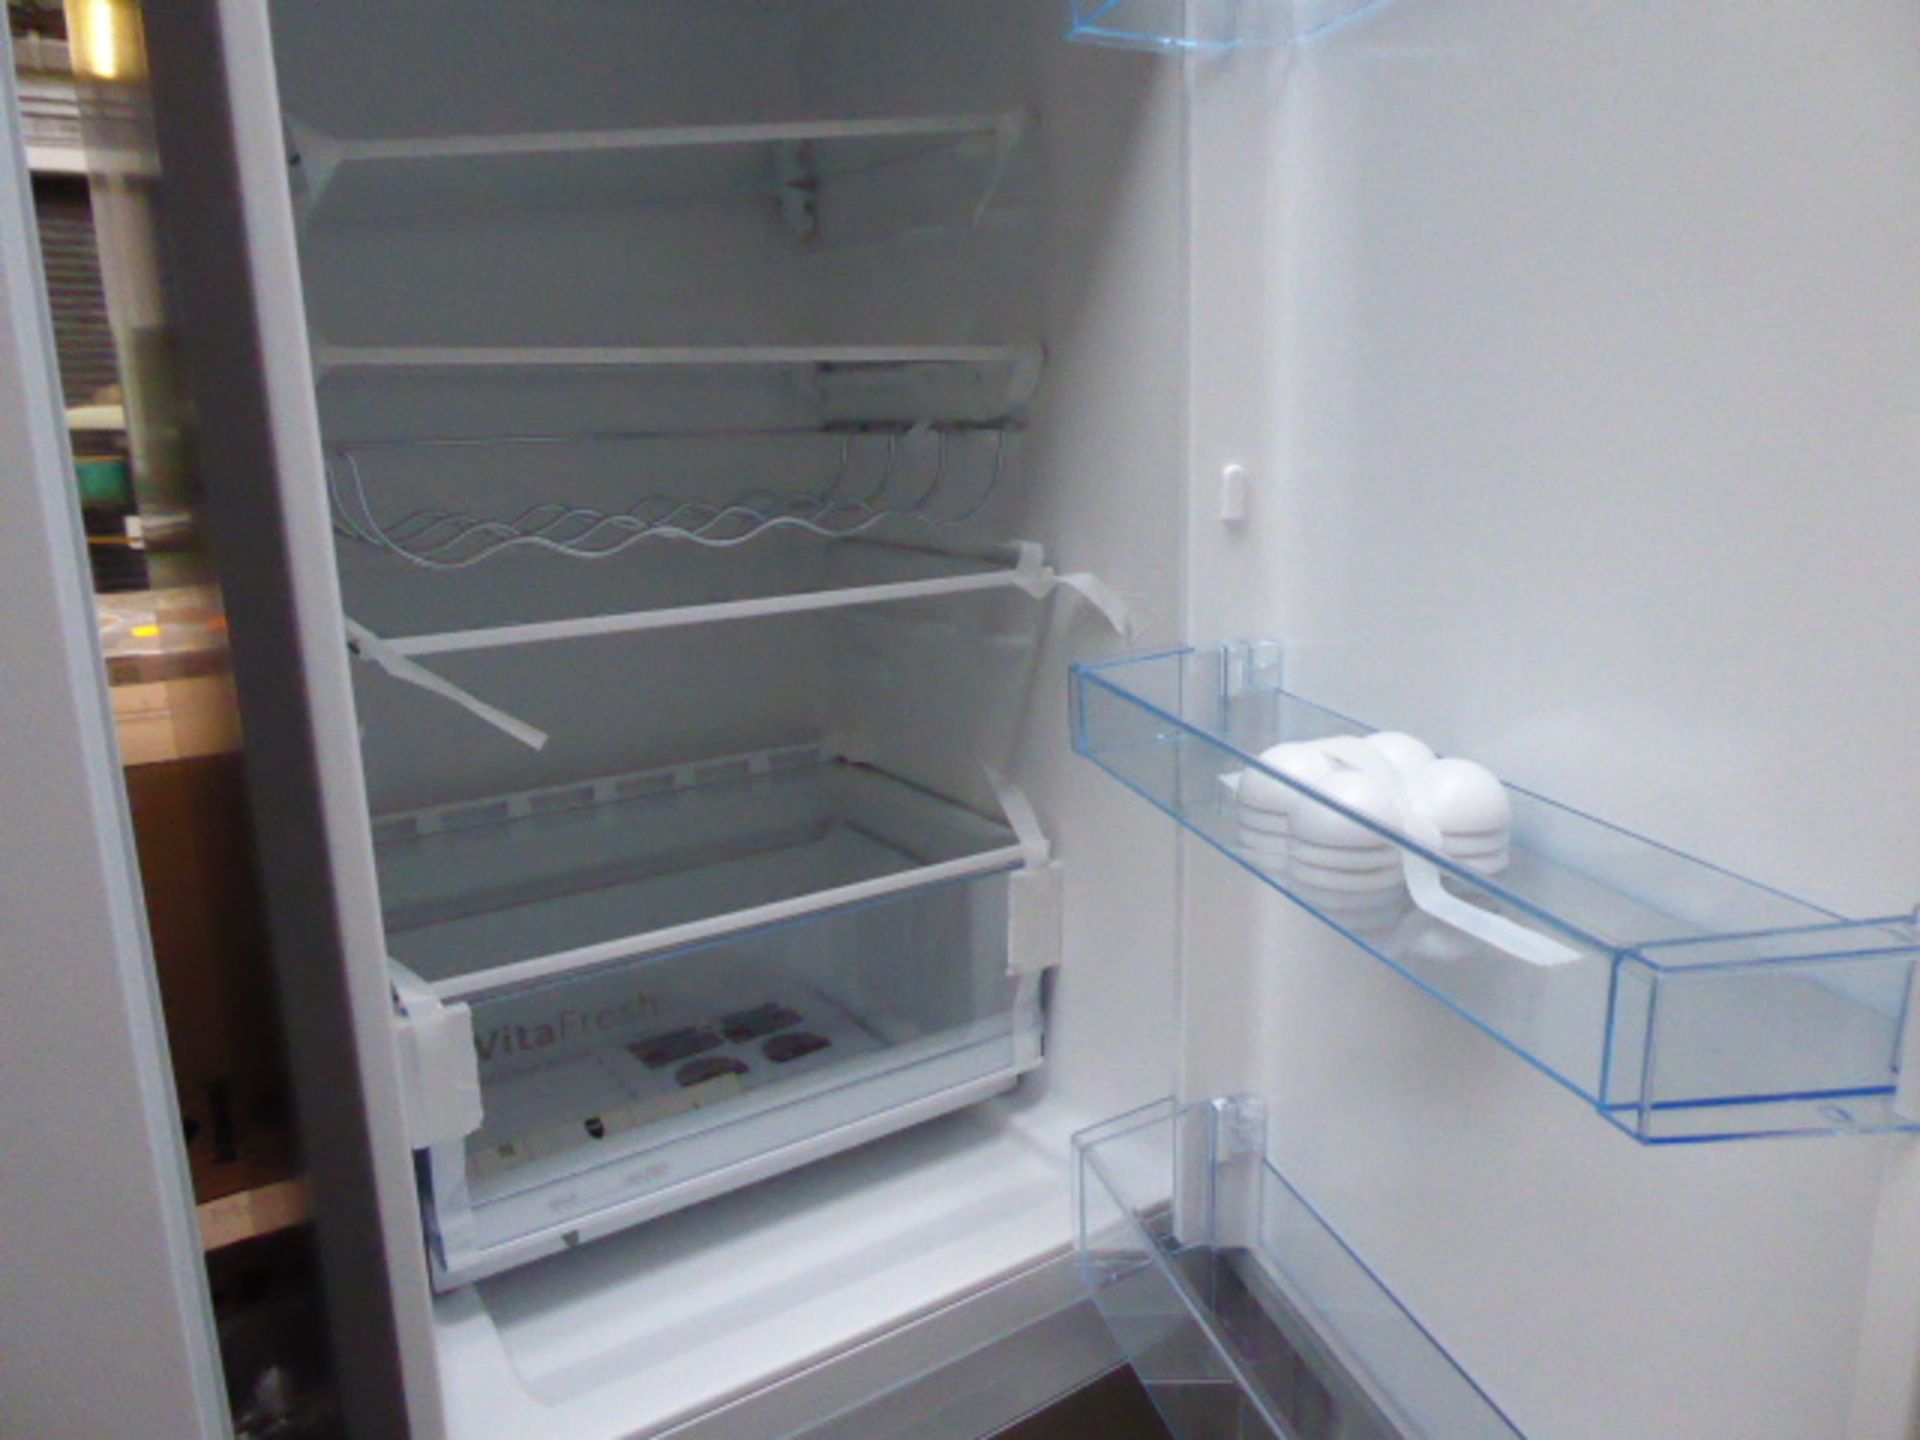 KGV33VLEAGB Bosch Free-standing fridge-freezer - Image 2 of 2